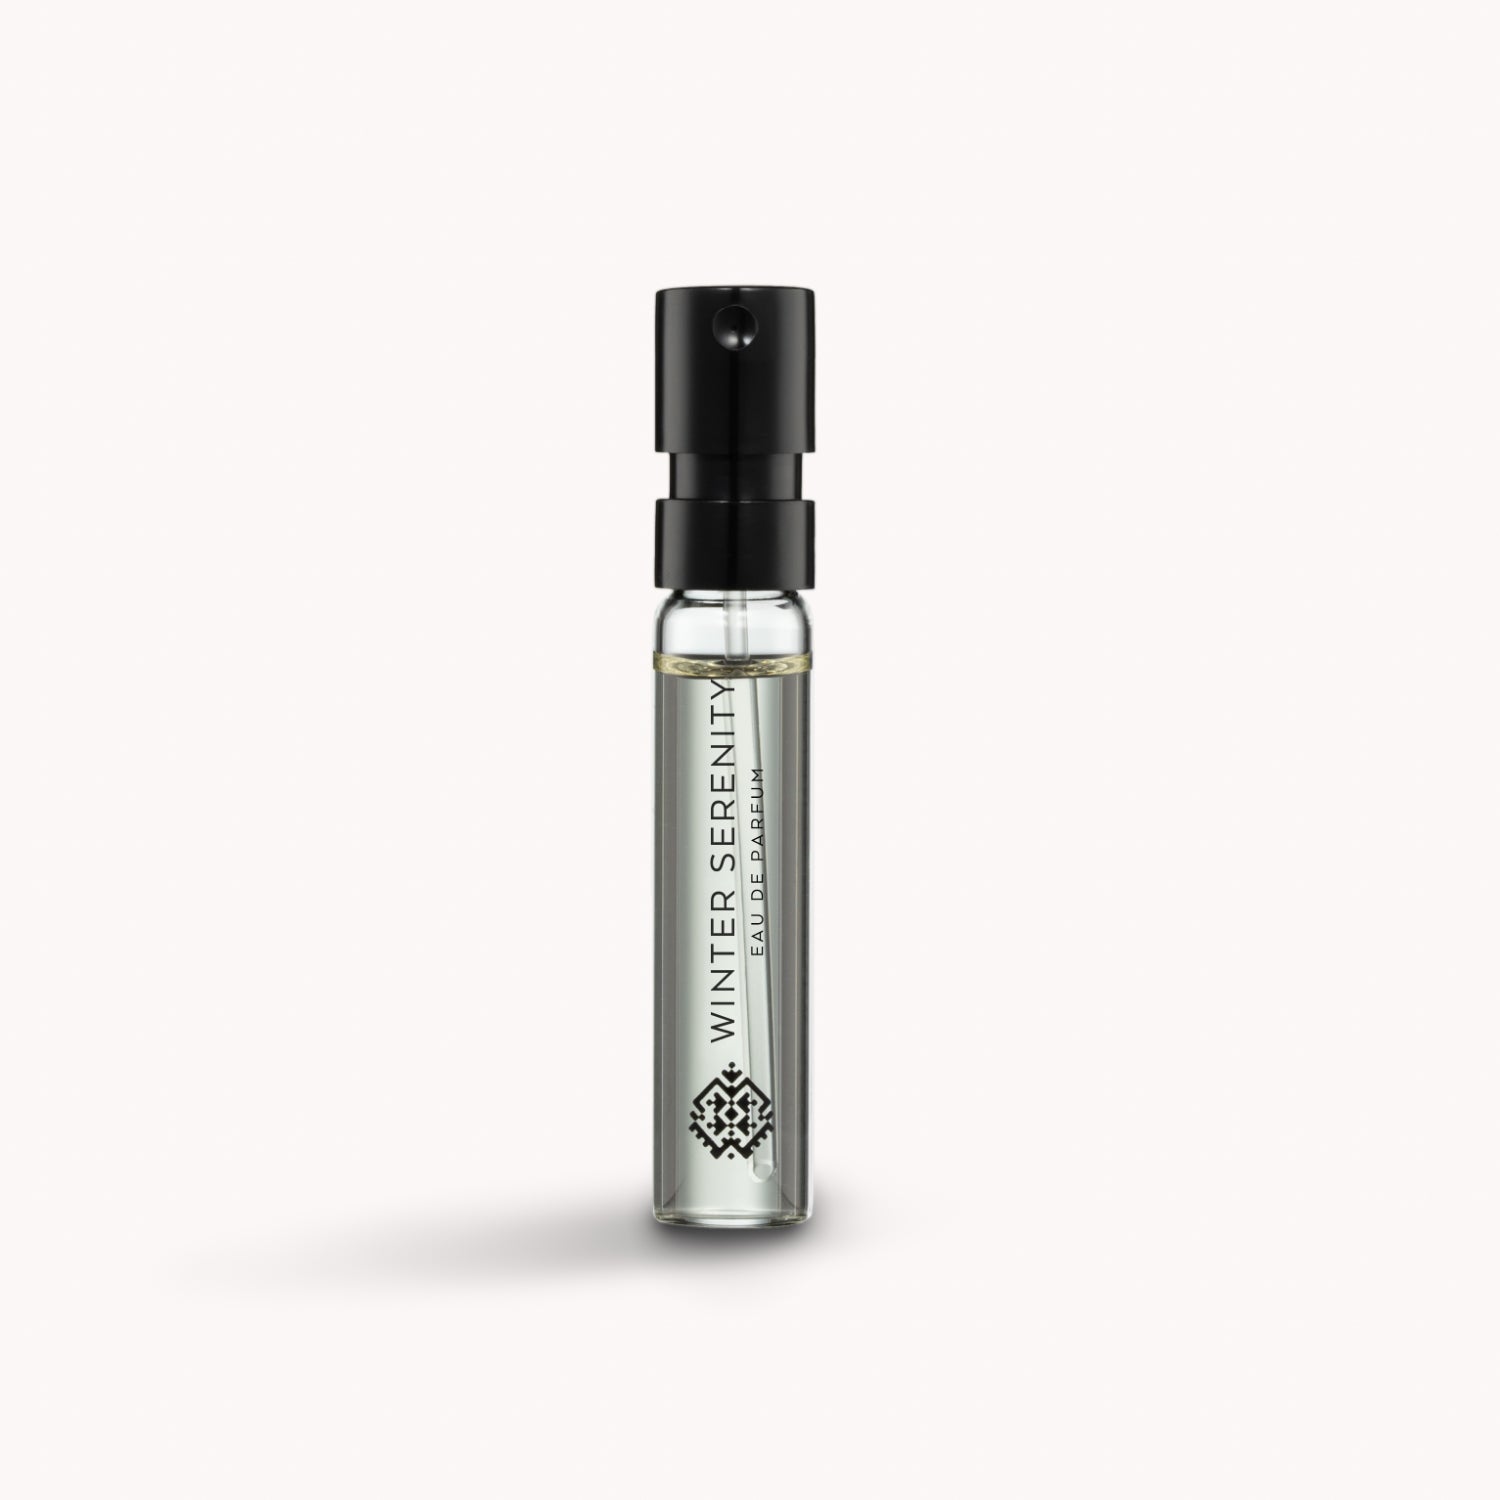 Winter Serenity Sample - Eau De Parfum 2ml - High-End Unisex Perfume for Men and Women